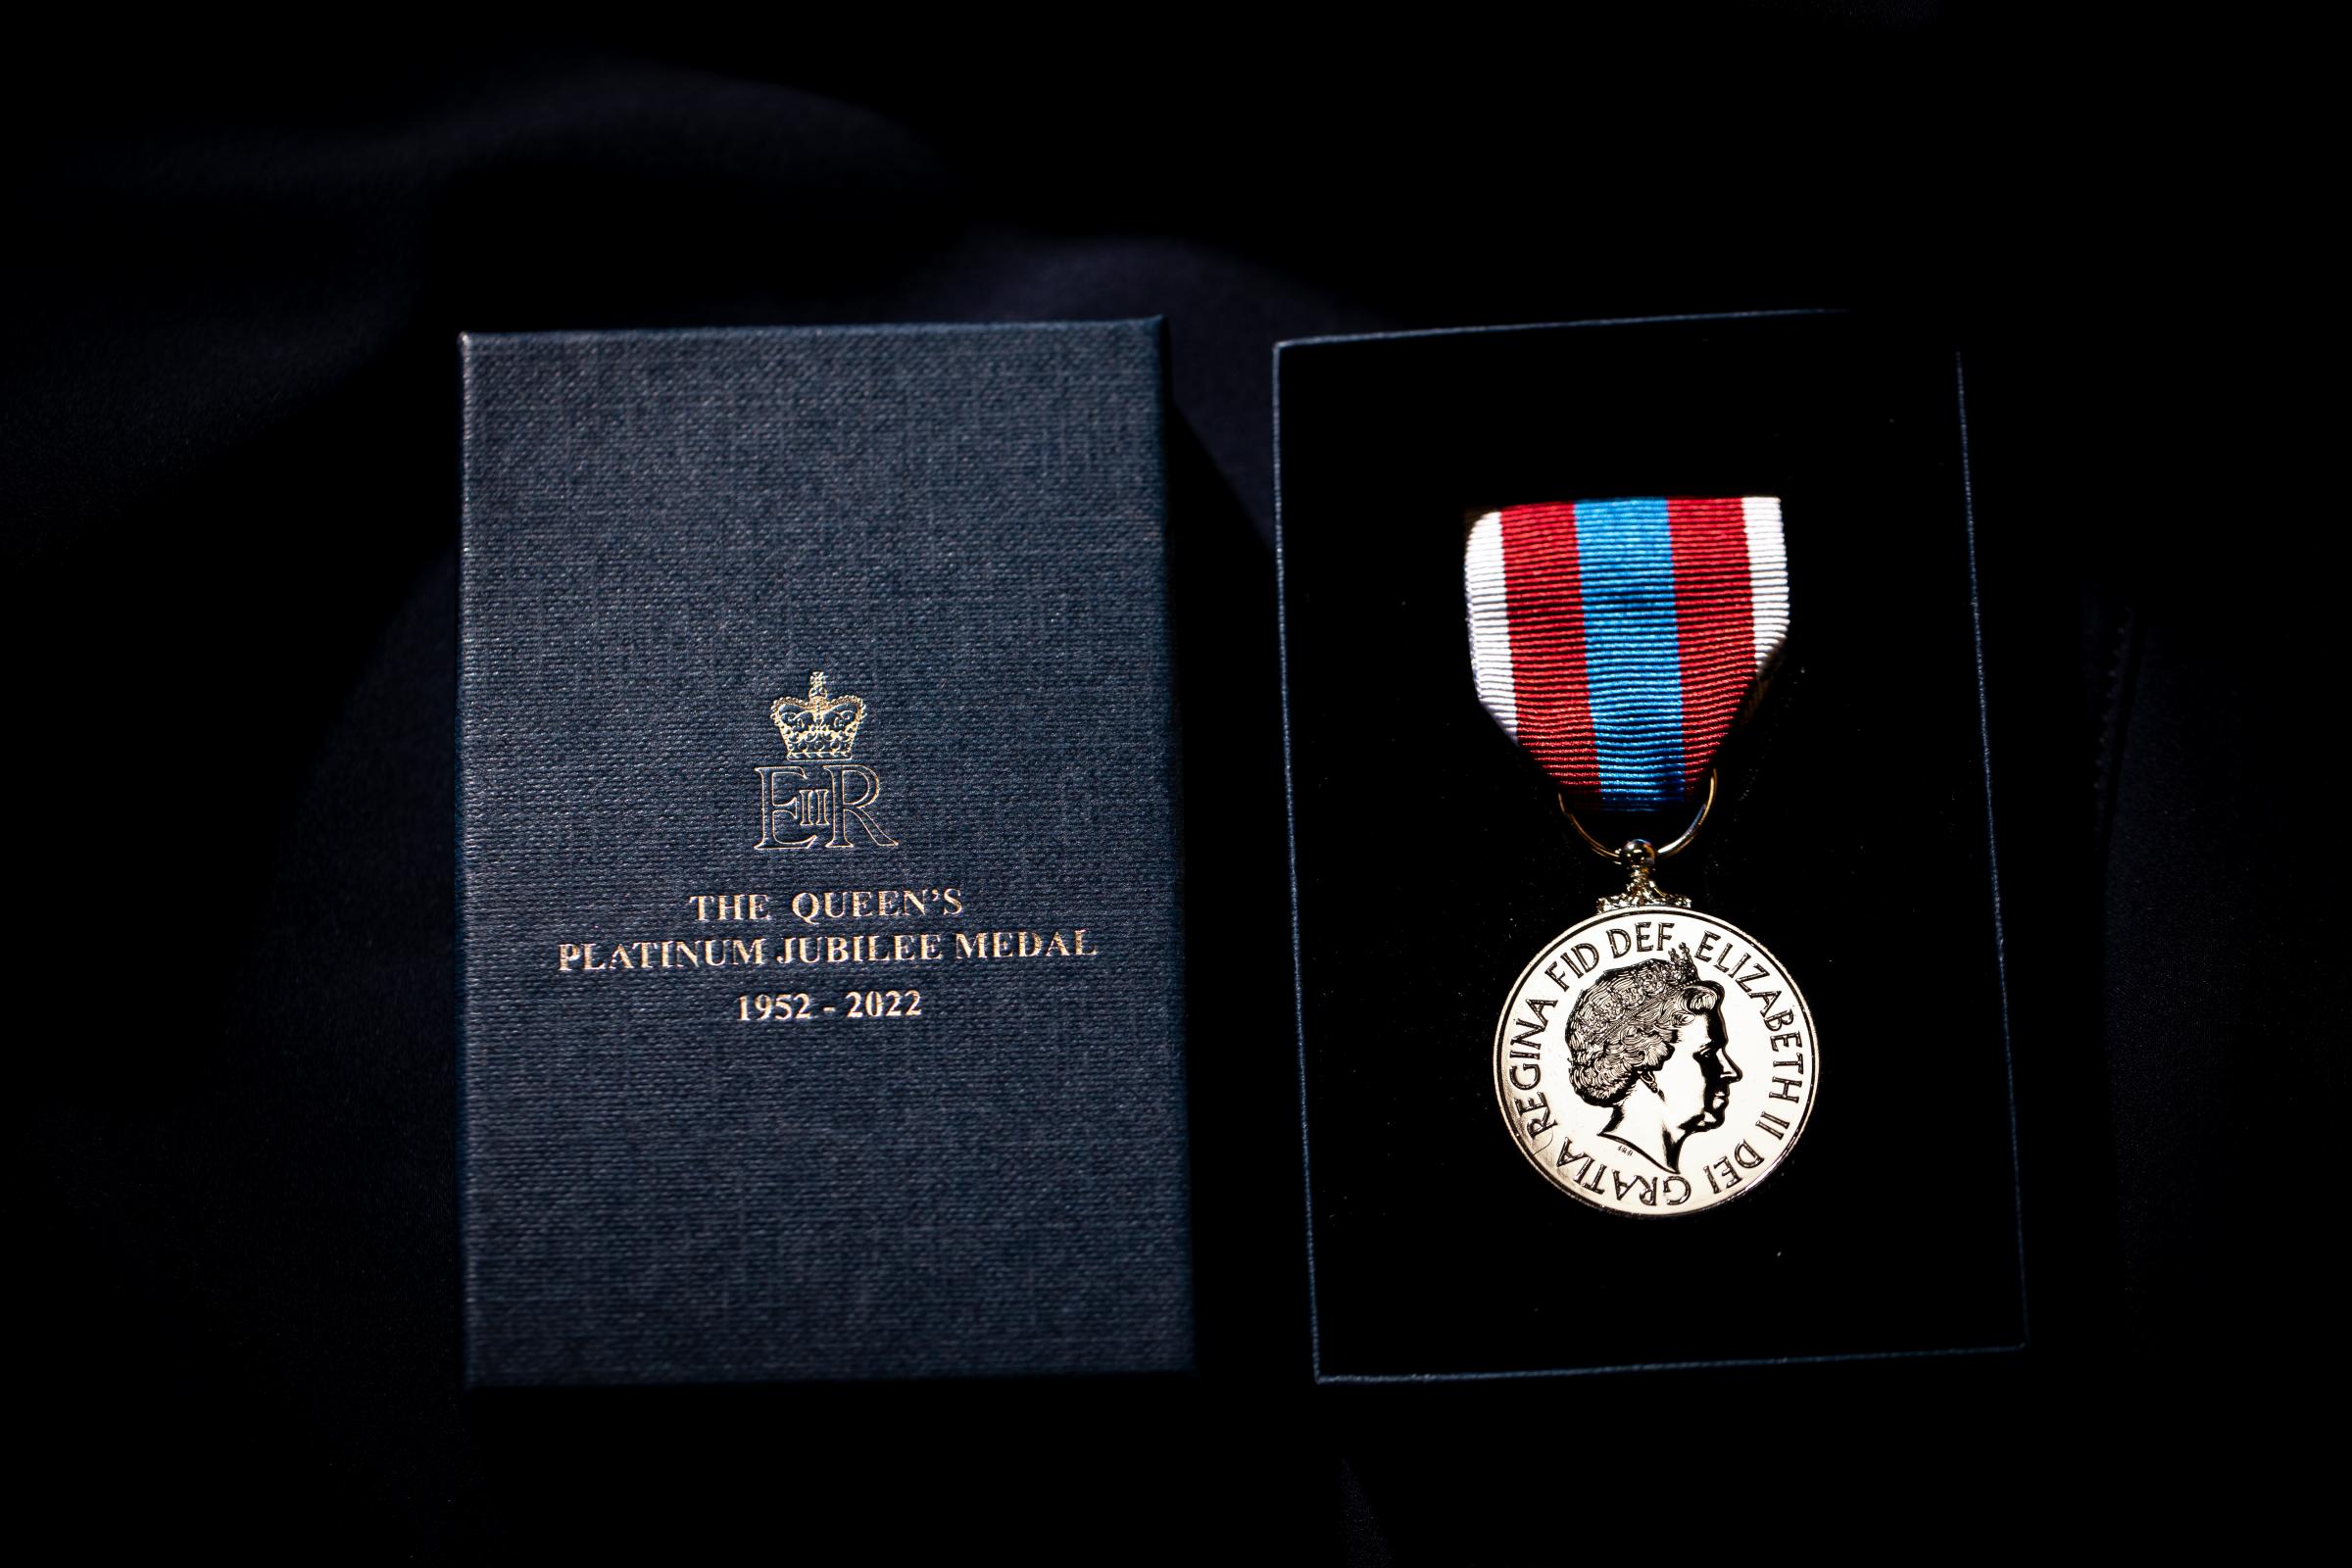 Queen Elizabeth II Platinum Jubilee medal which was awarded to crew members in 2022.